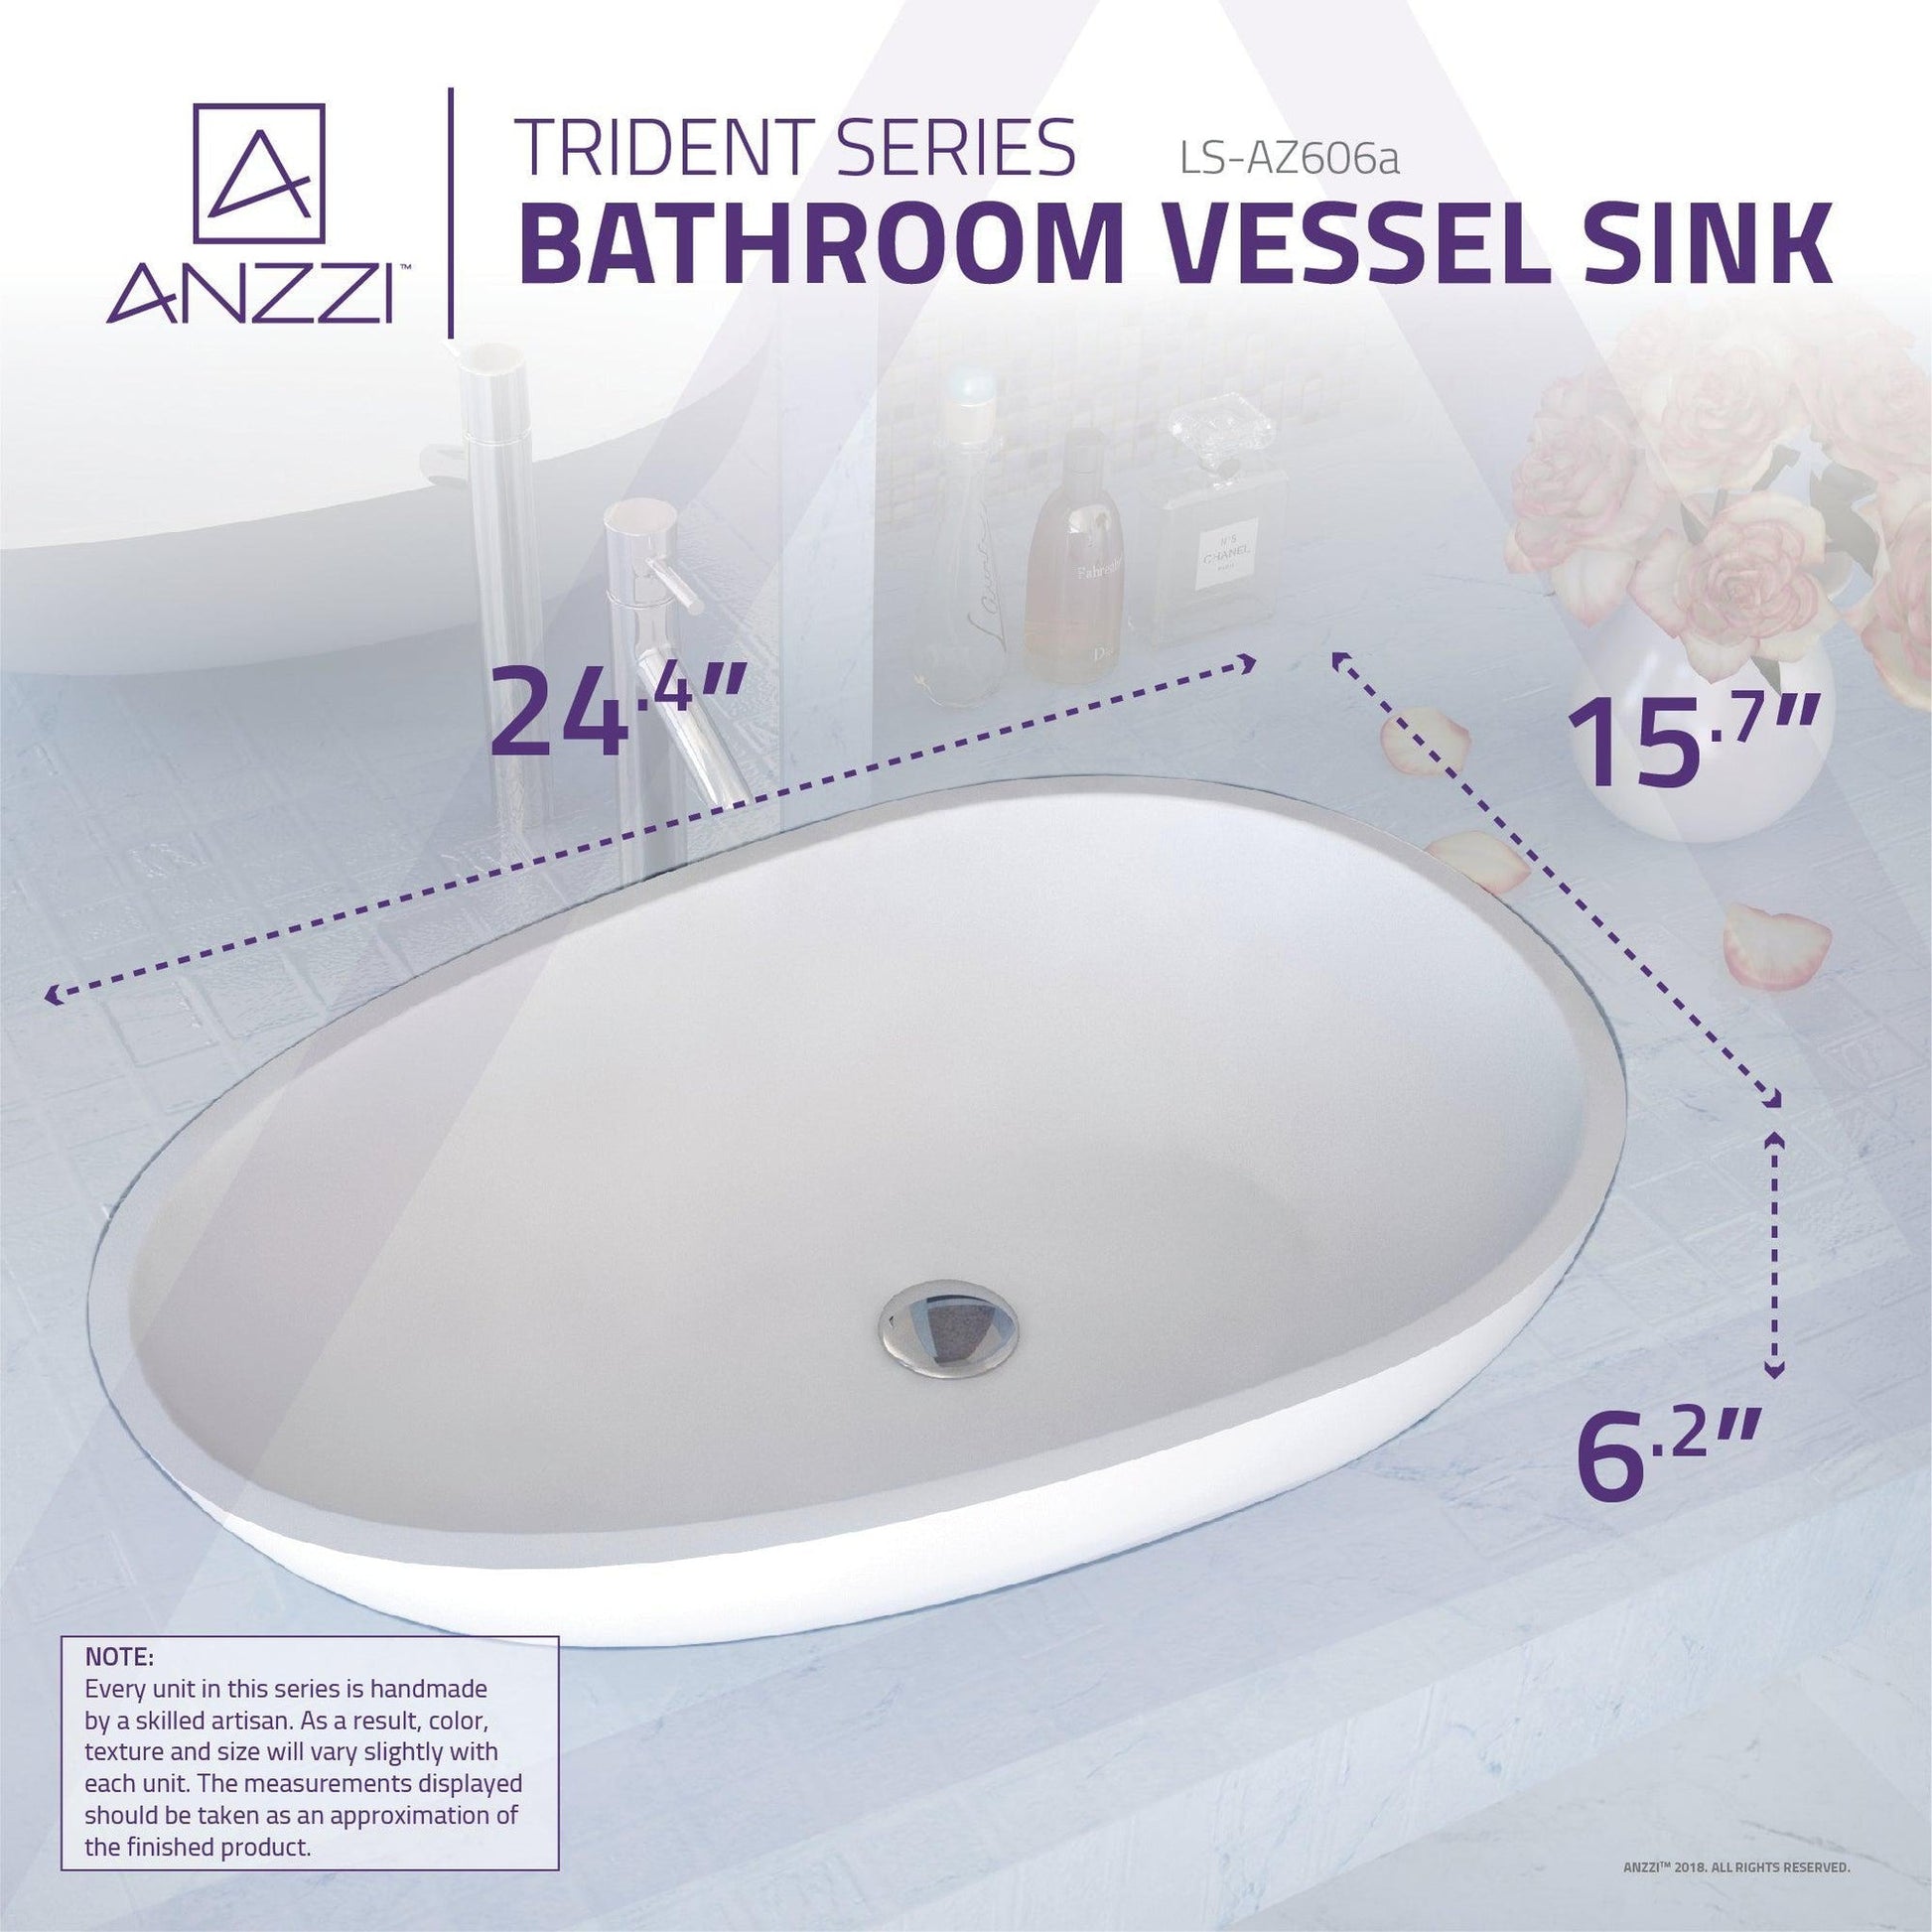 ANZZI Trident Series 24" x 16" Oval Shape Vessel Sink in Matte White Finish